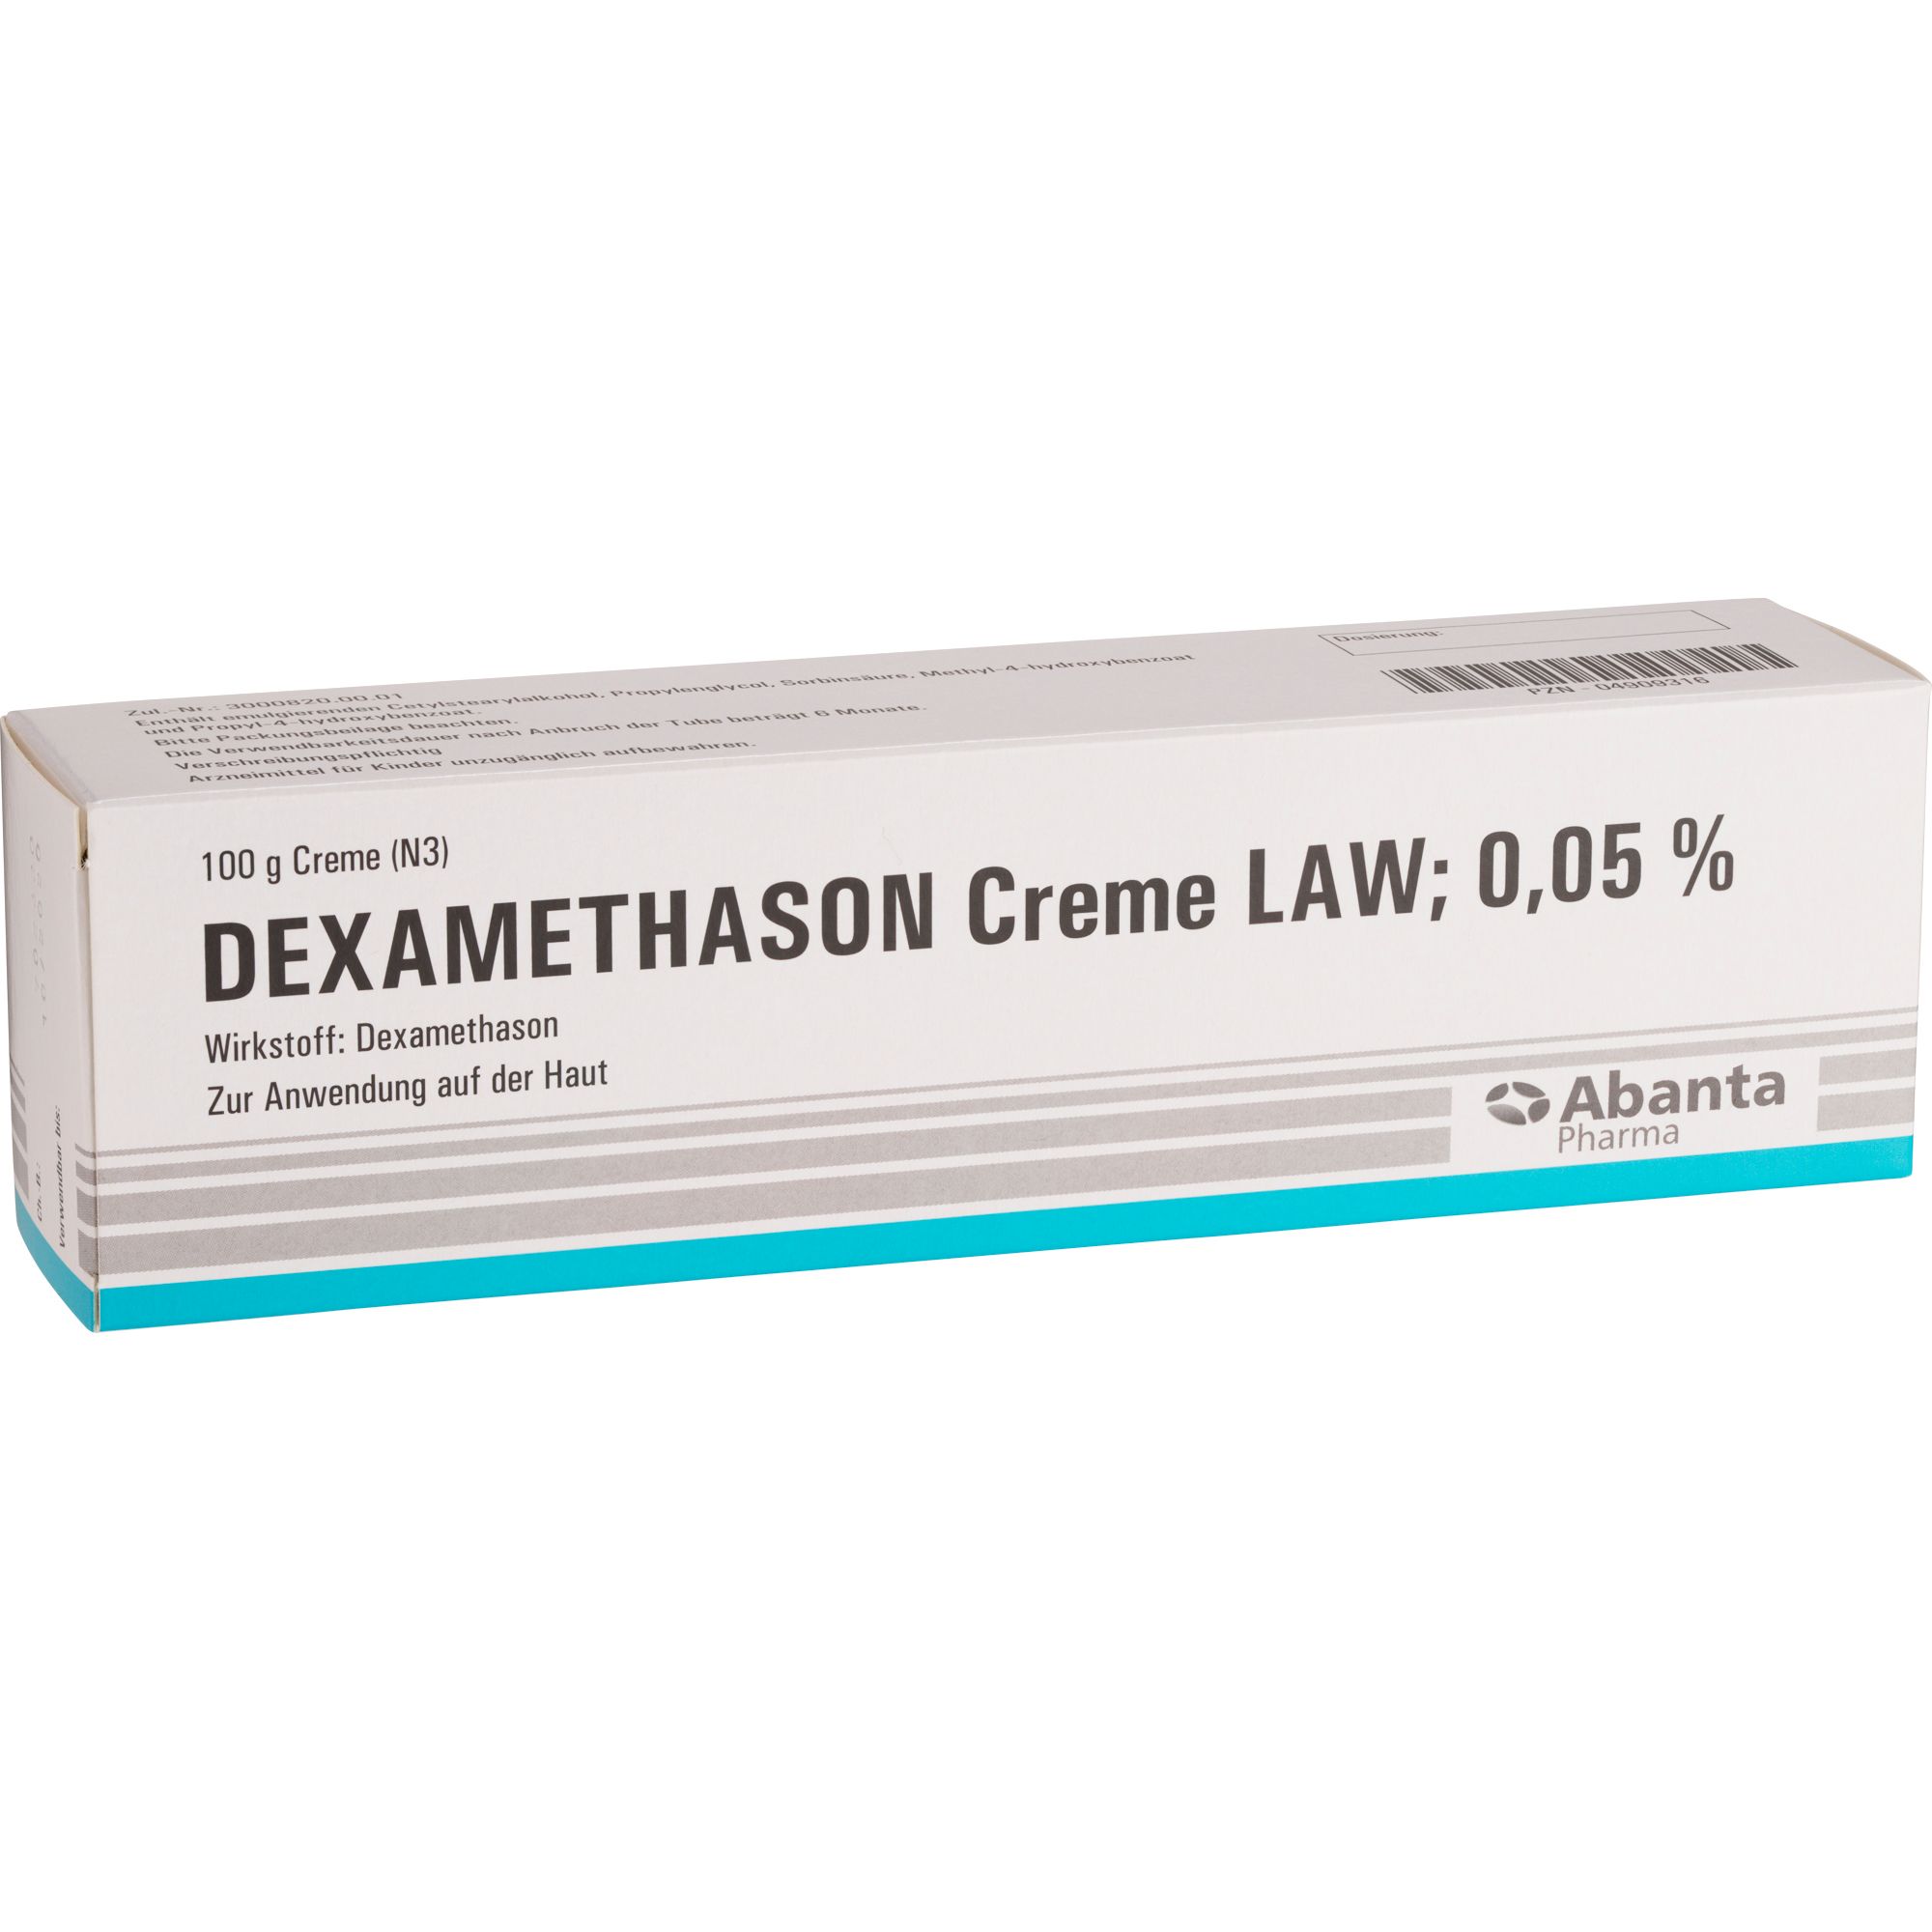 DEXAMETHASON Creme LAW 0,05%